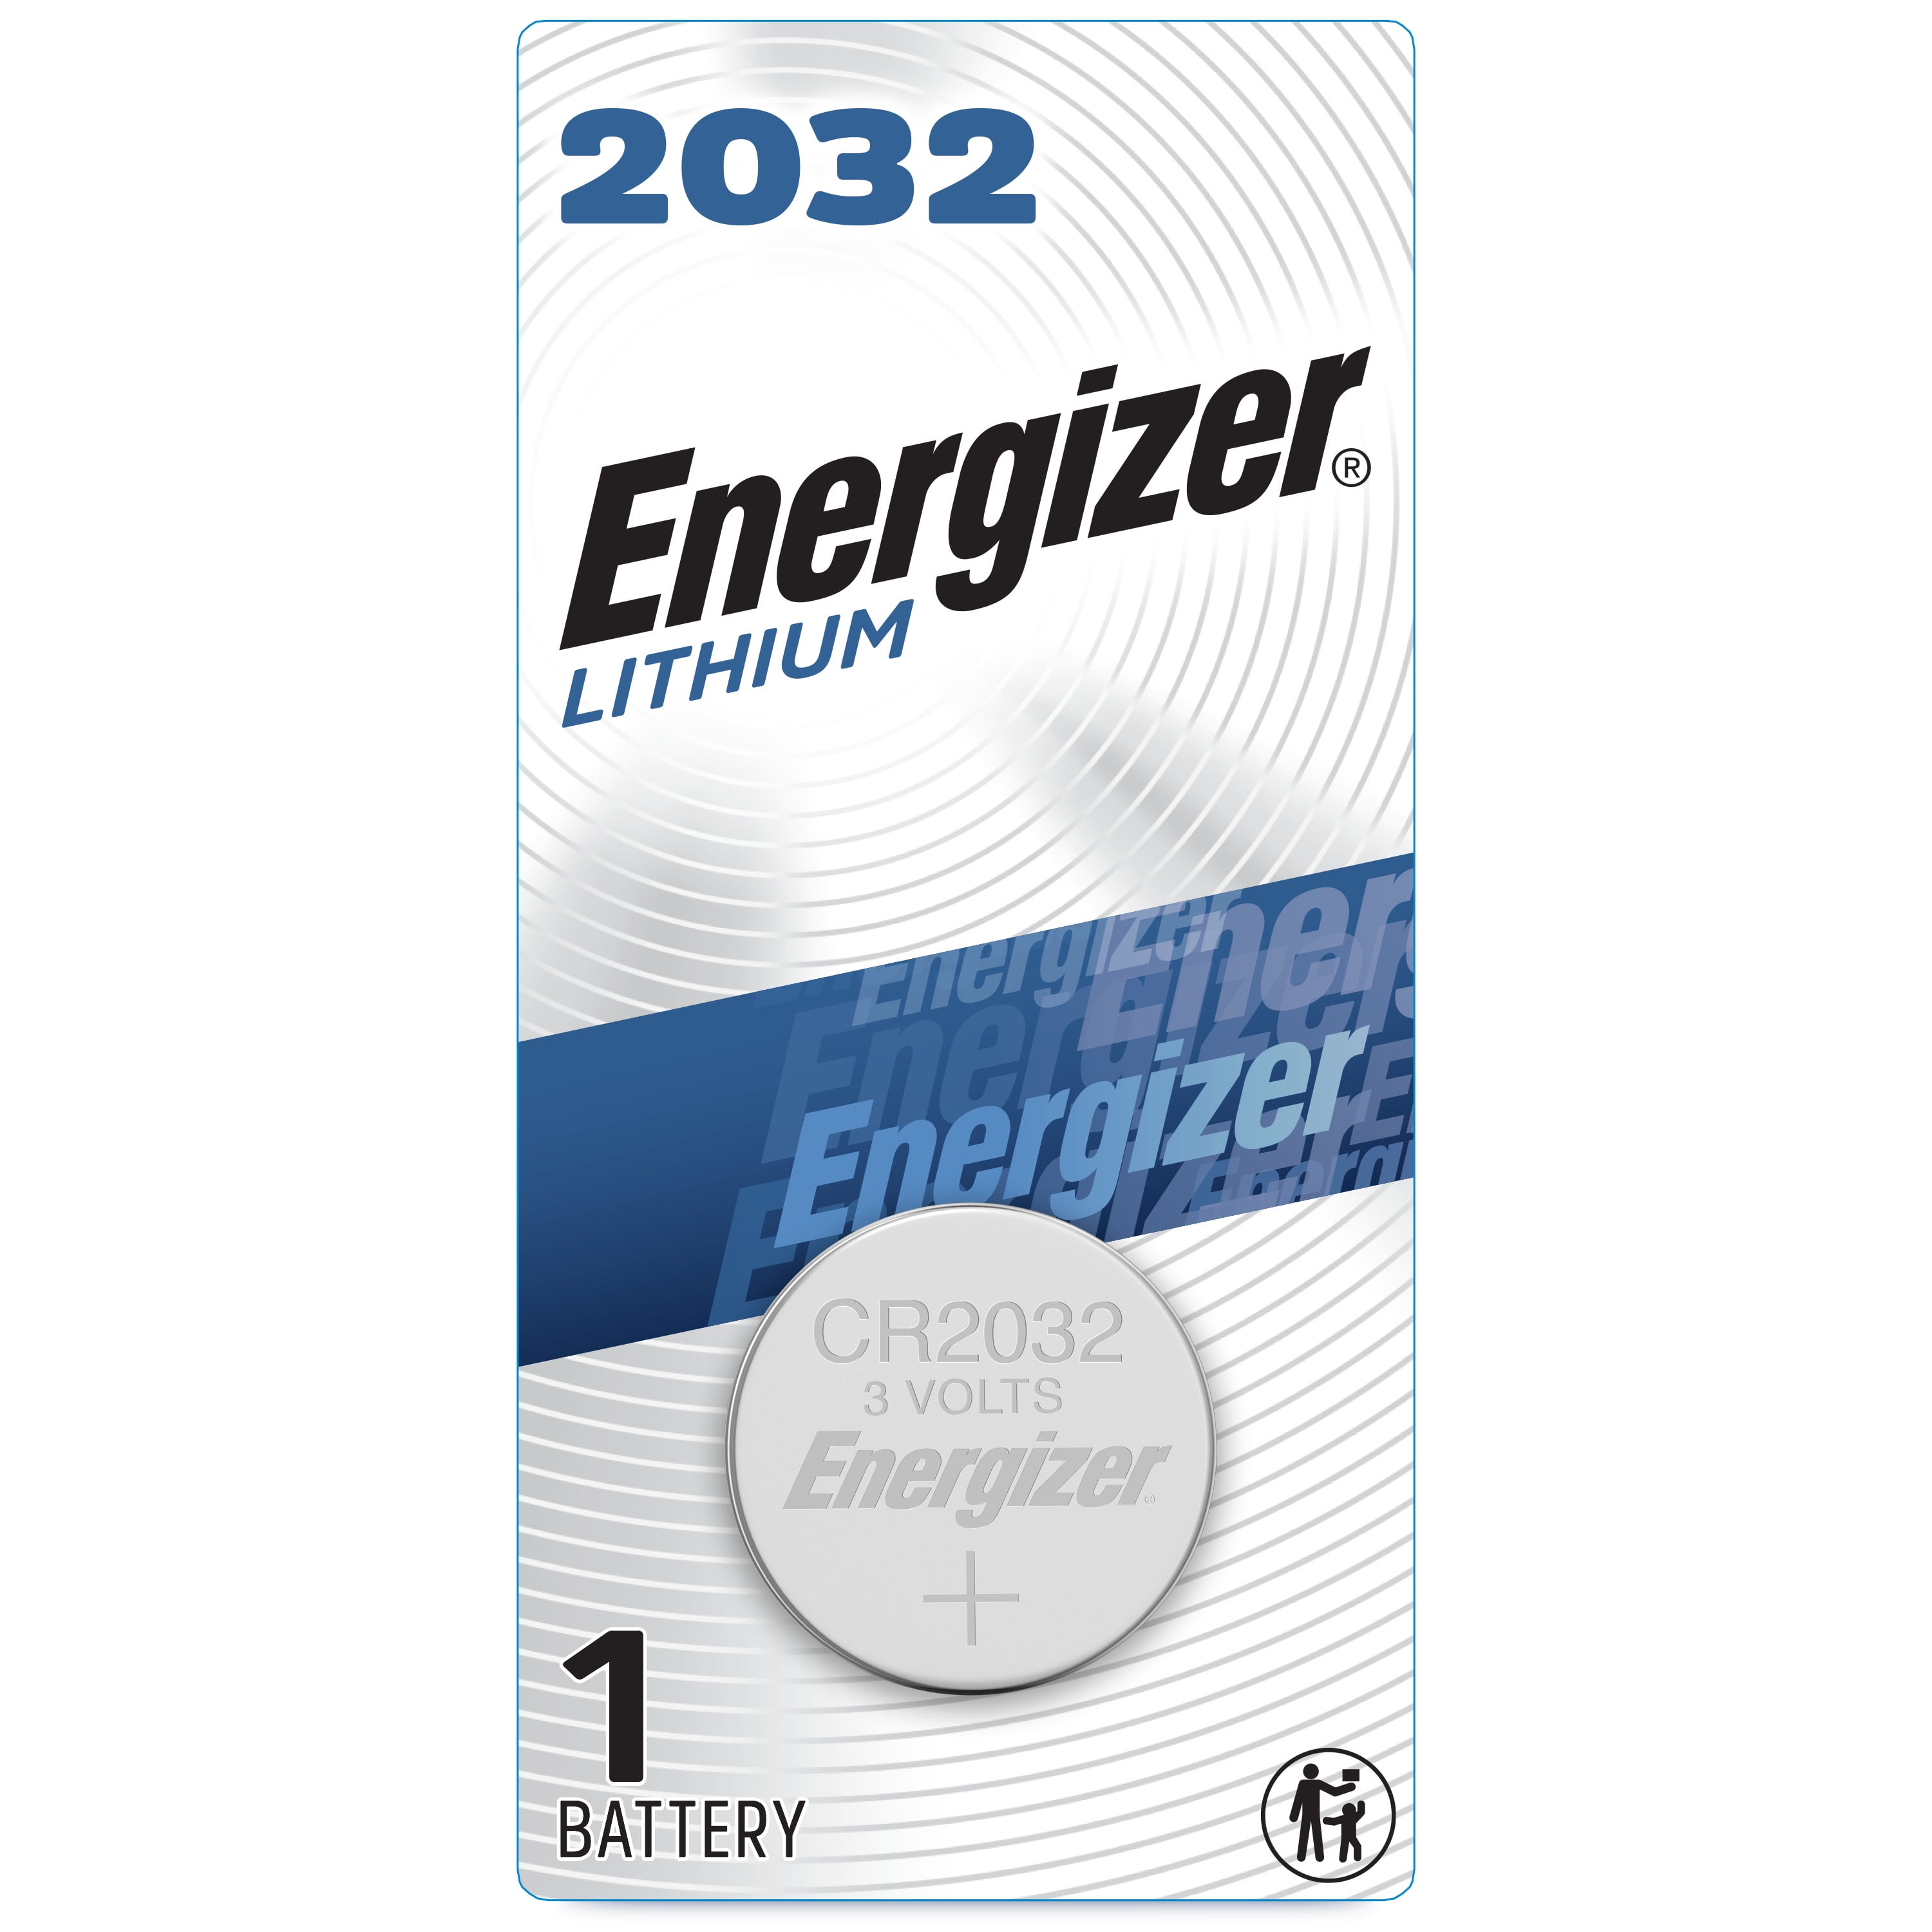 Energizer Industrial 2032 Lithium Batteries - EVEECRN2032BX 